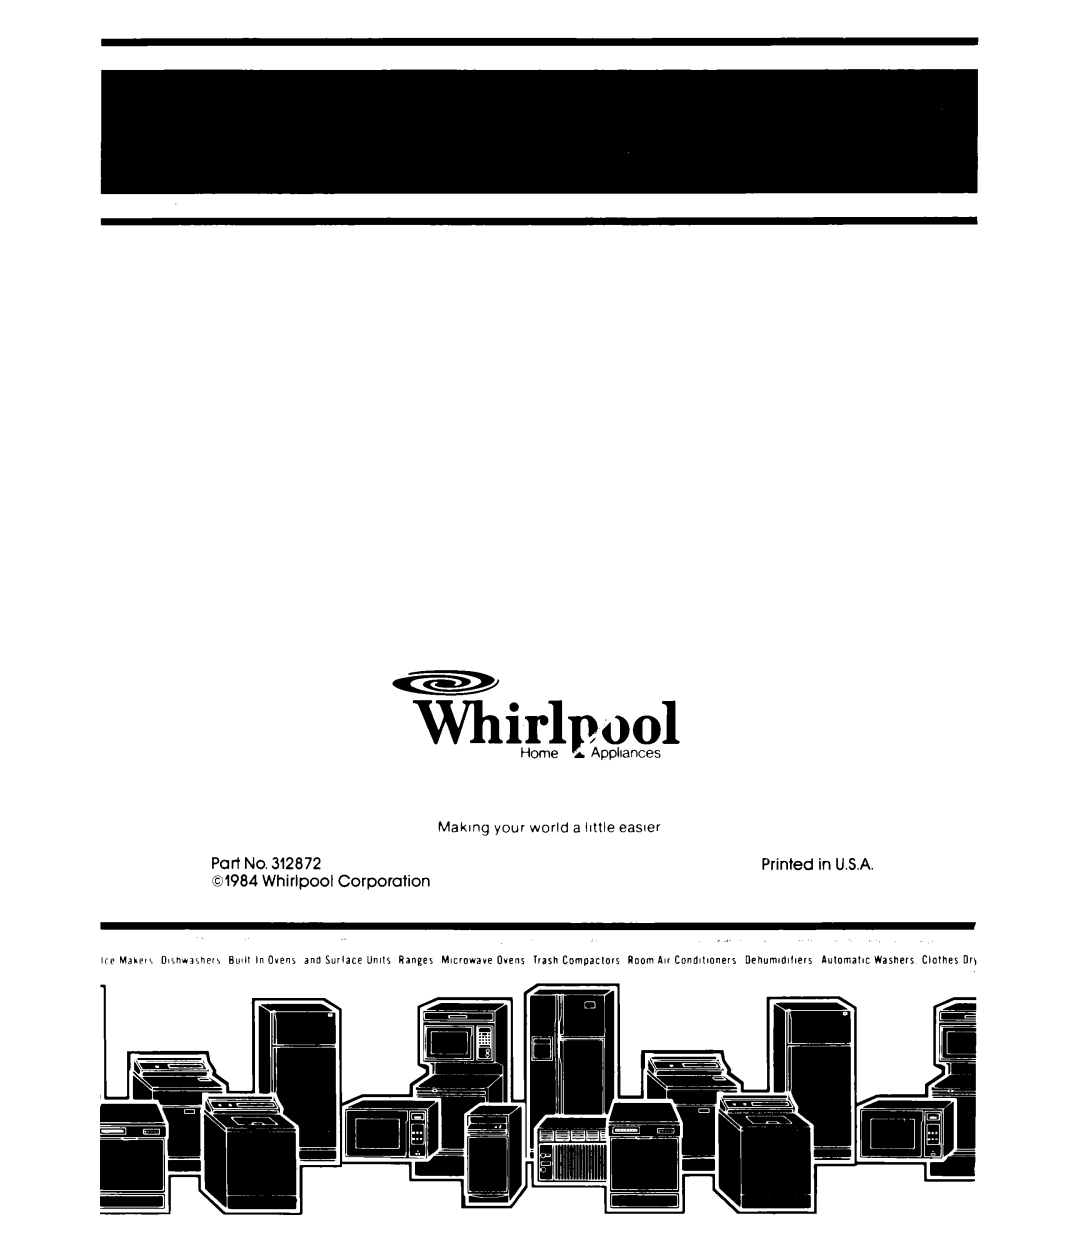 Whirlpool MW8500XP manual Whirlpol, Home A /Appliances, Maklng your world a IlltIe easier, Whirlpool, Corporation 